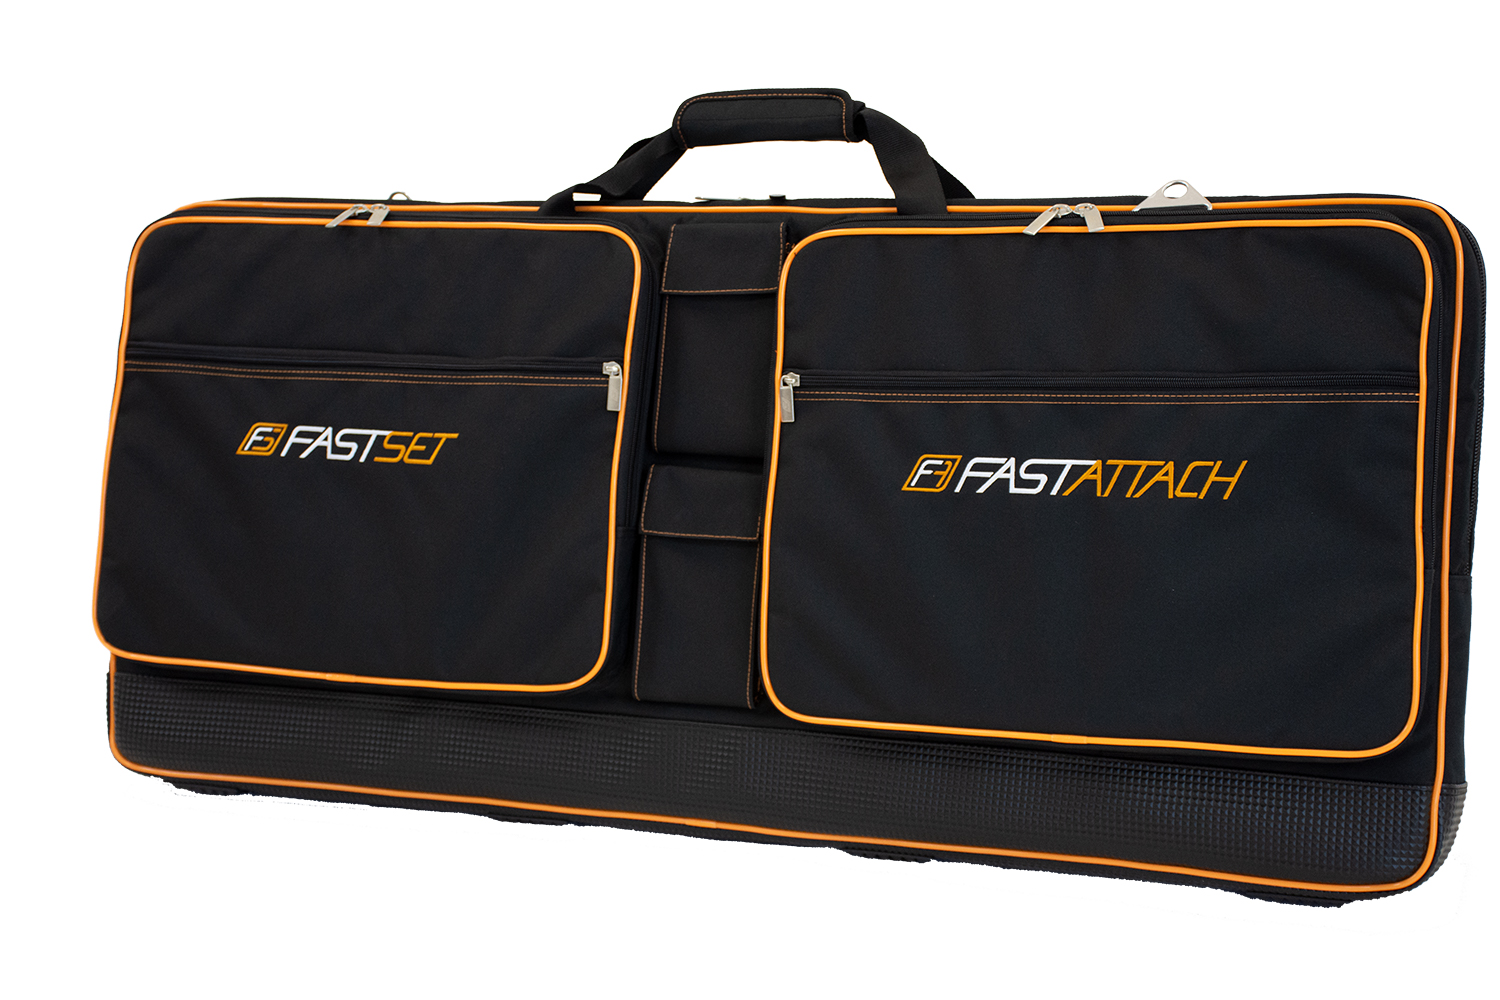 fastset-carry-case-2.jpg